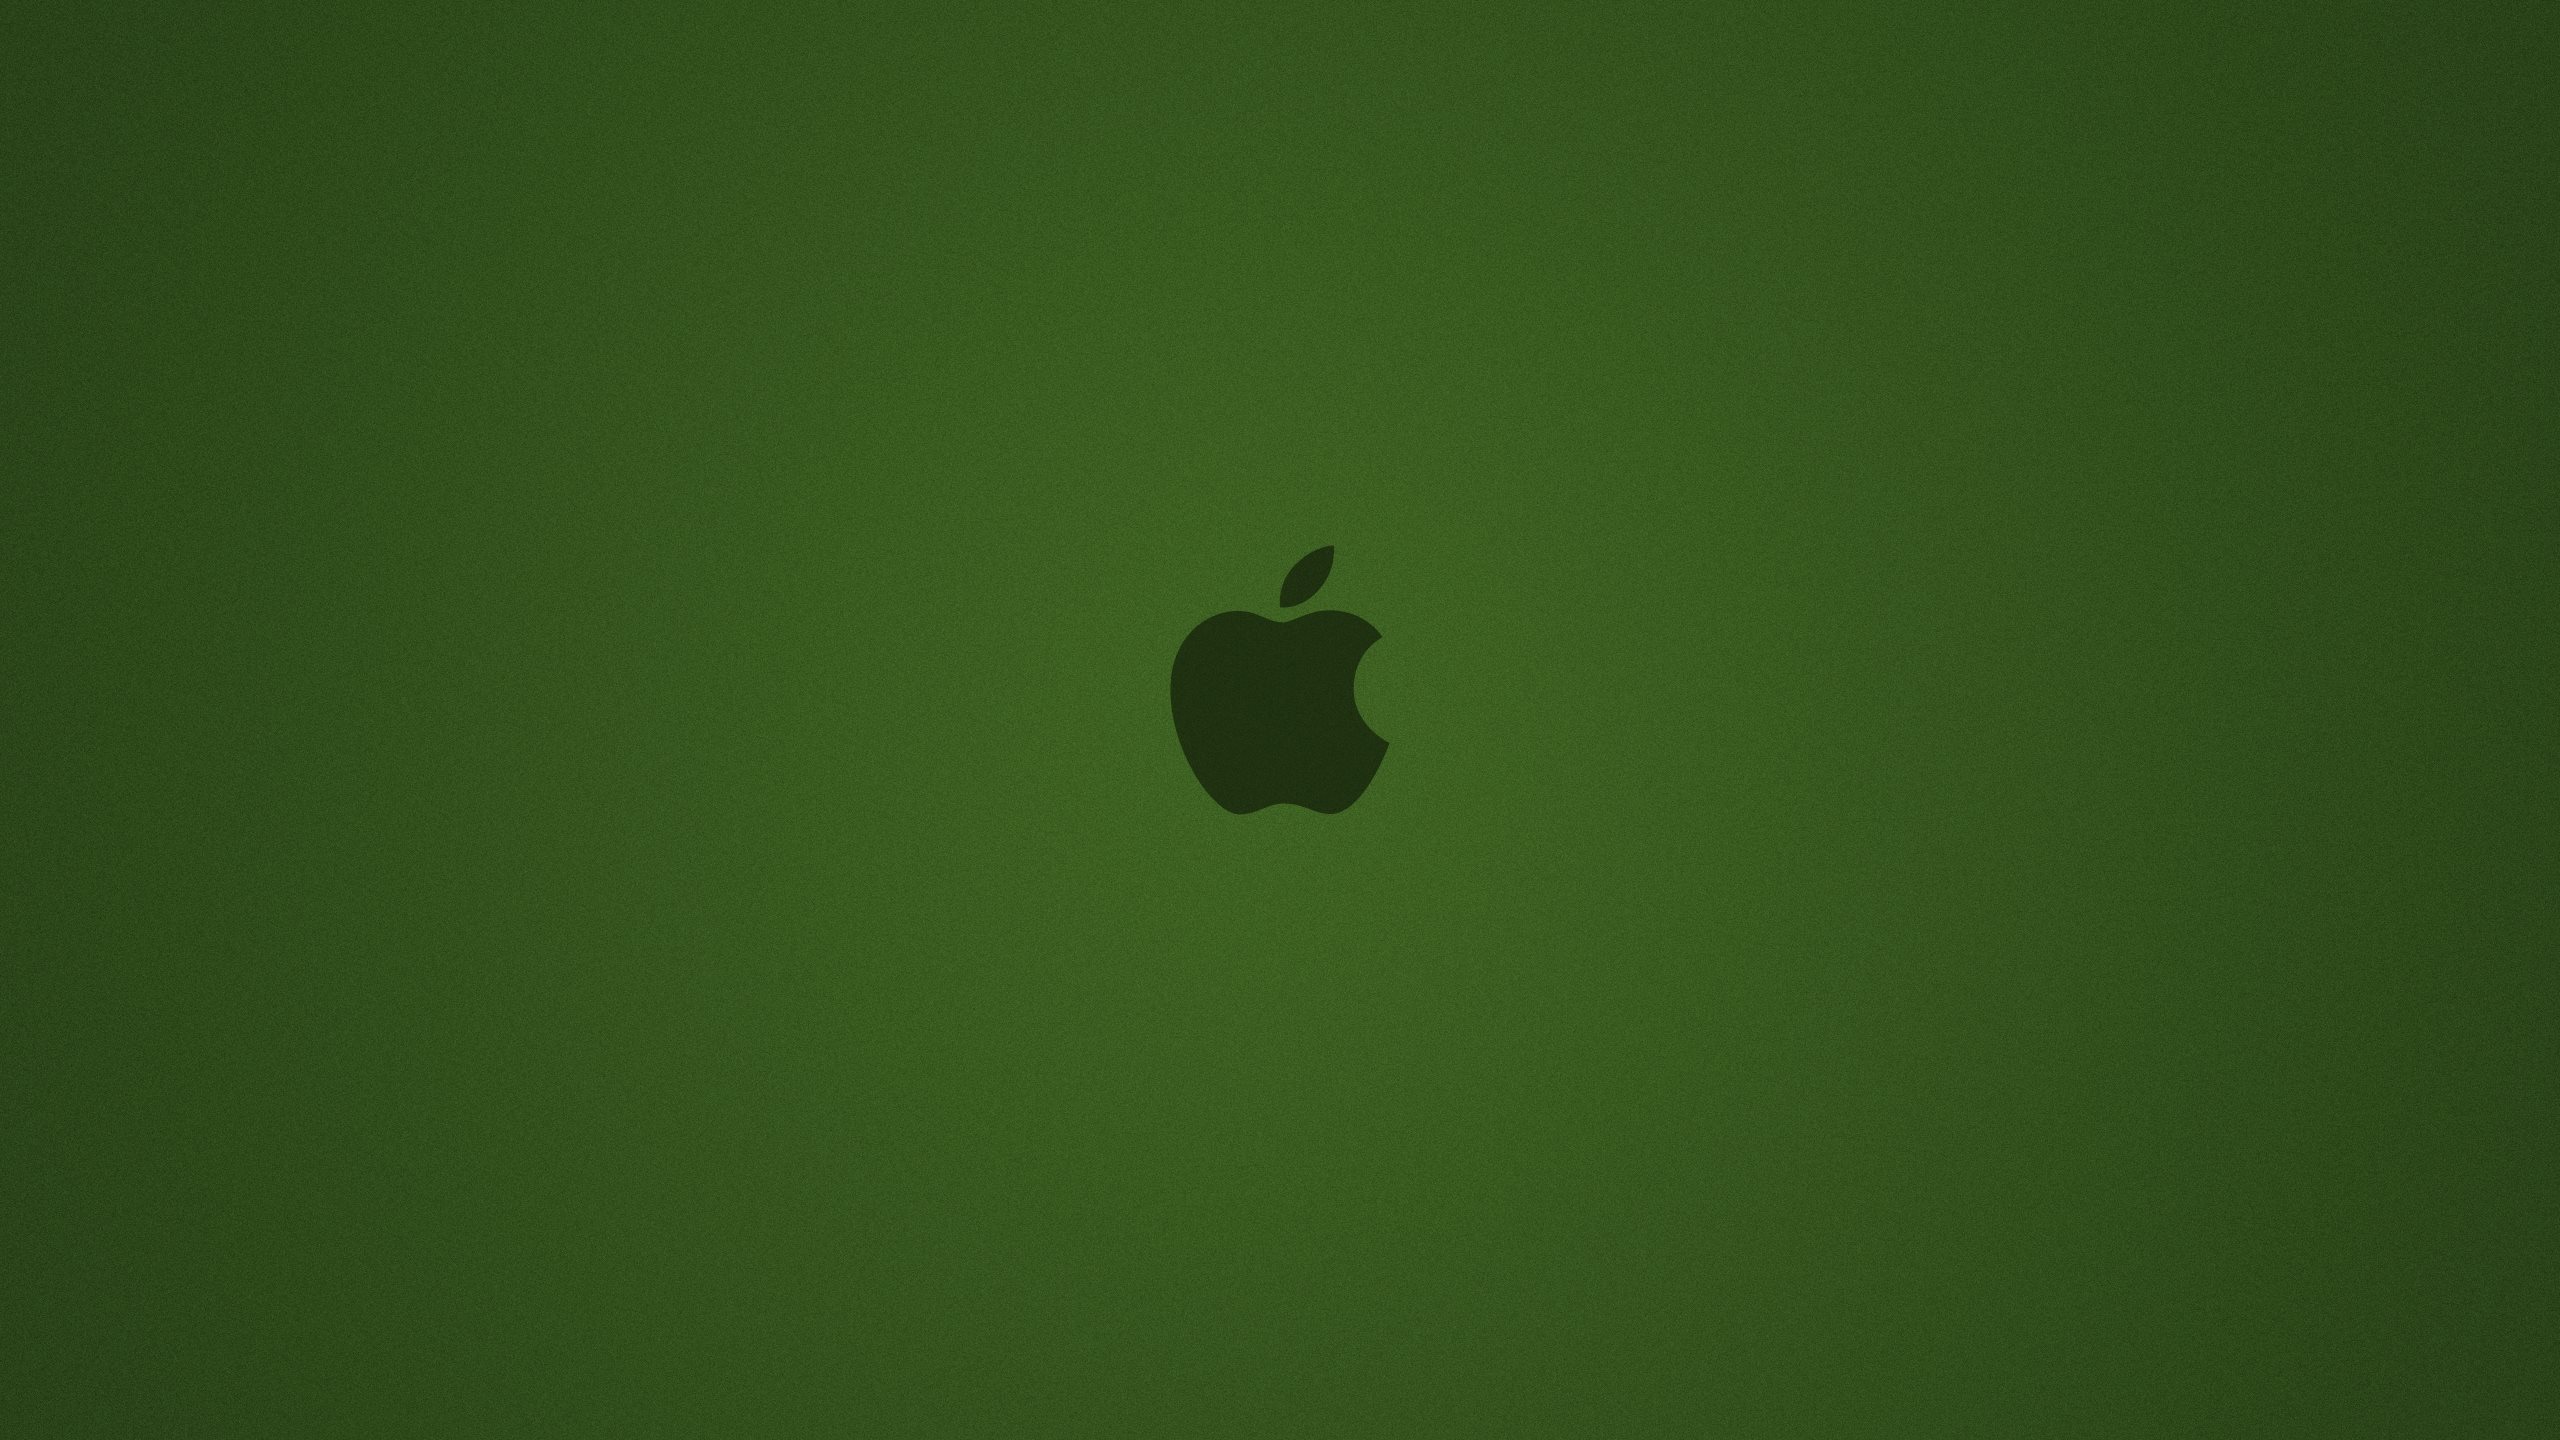 Обои на айфон яблоко. Эпл айфон. Зеленые обои. Фон Apple. Яблоко айфон.